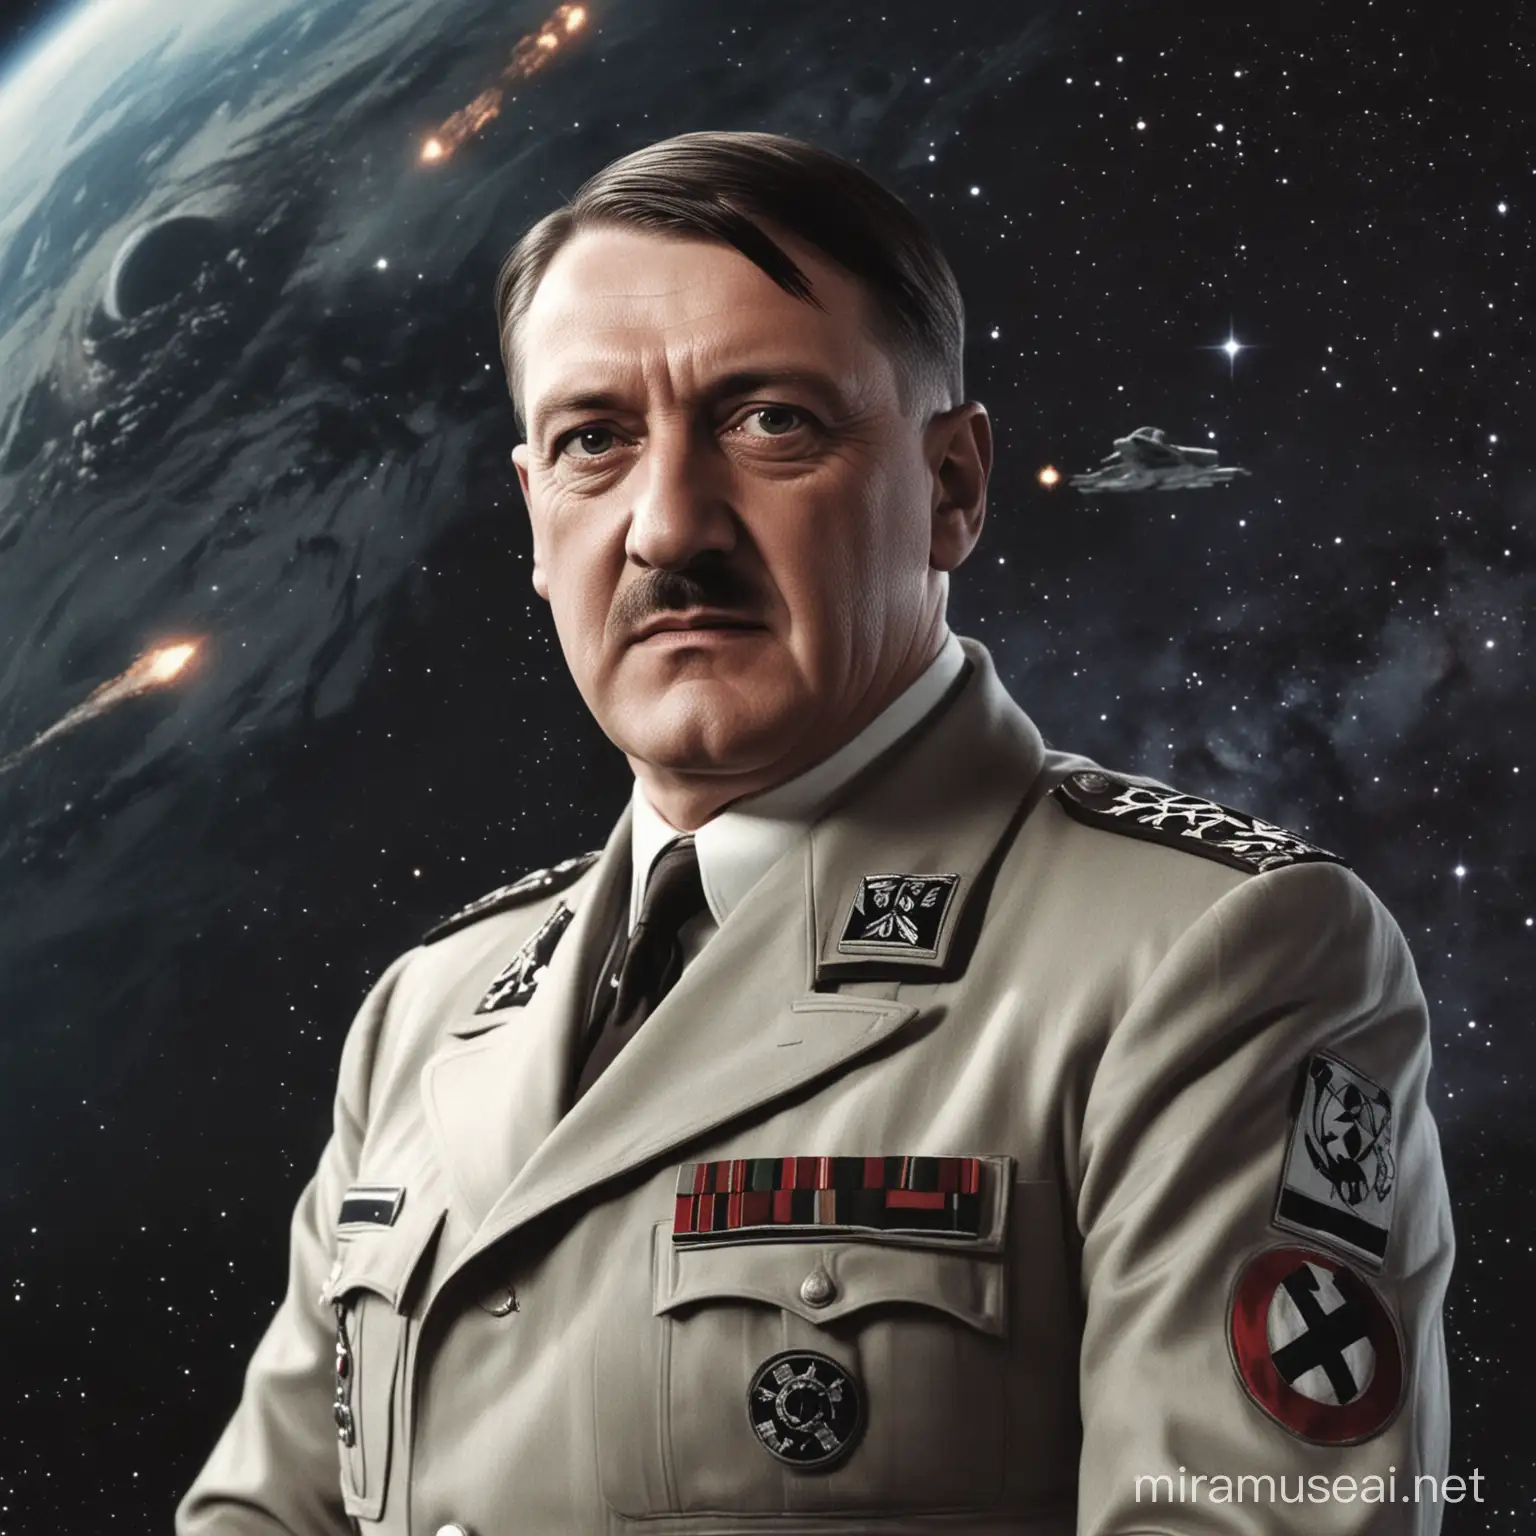 Hitler in space